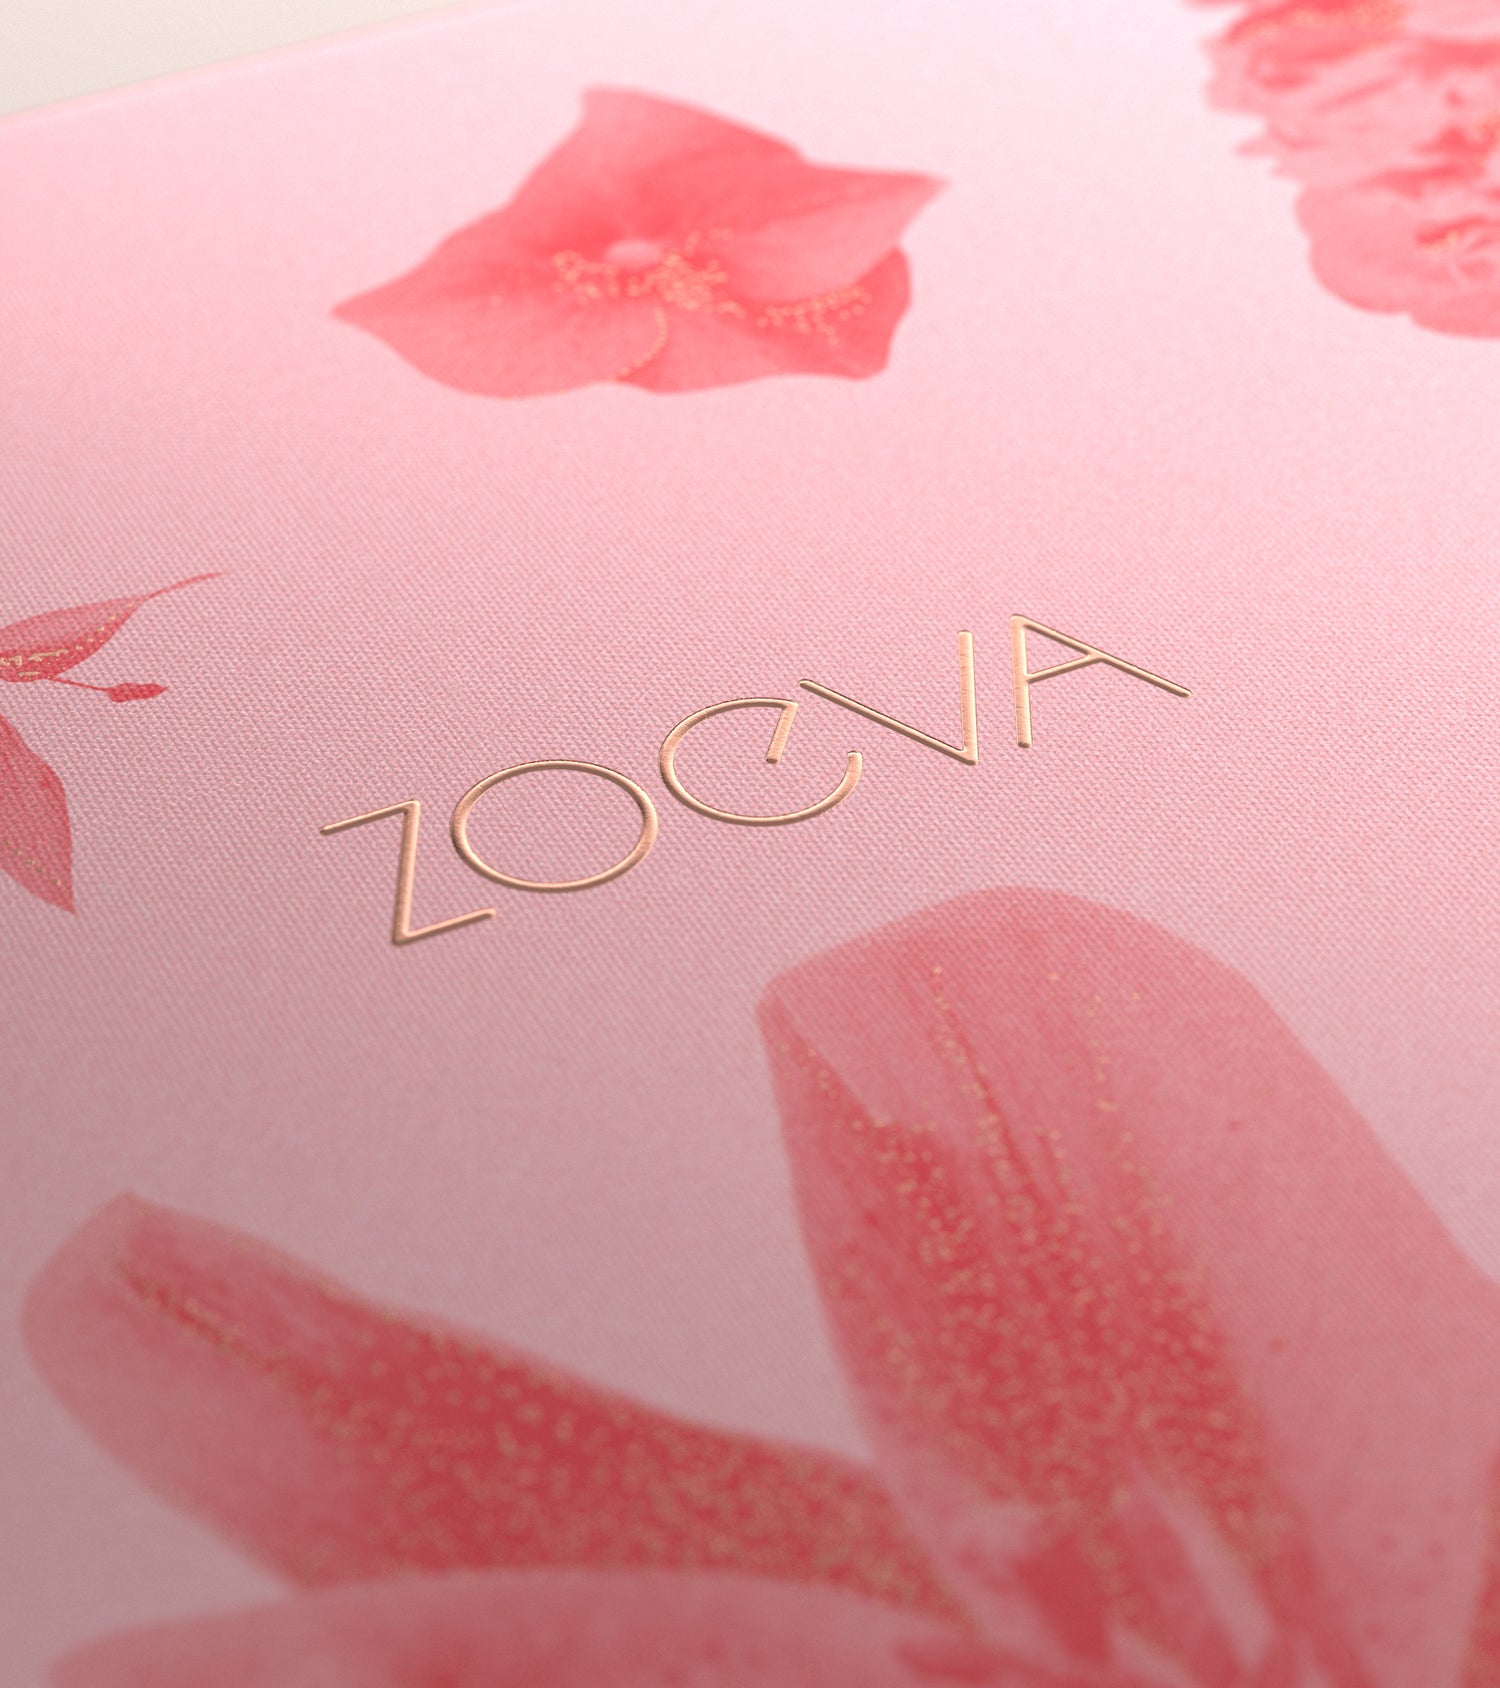 ZOEVA - The Complete Pinselset & Shoulder Strap (Dusty Rose/Bordeaux) - BRUSH SET